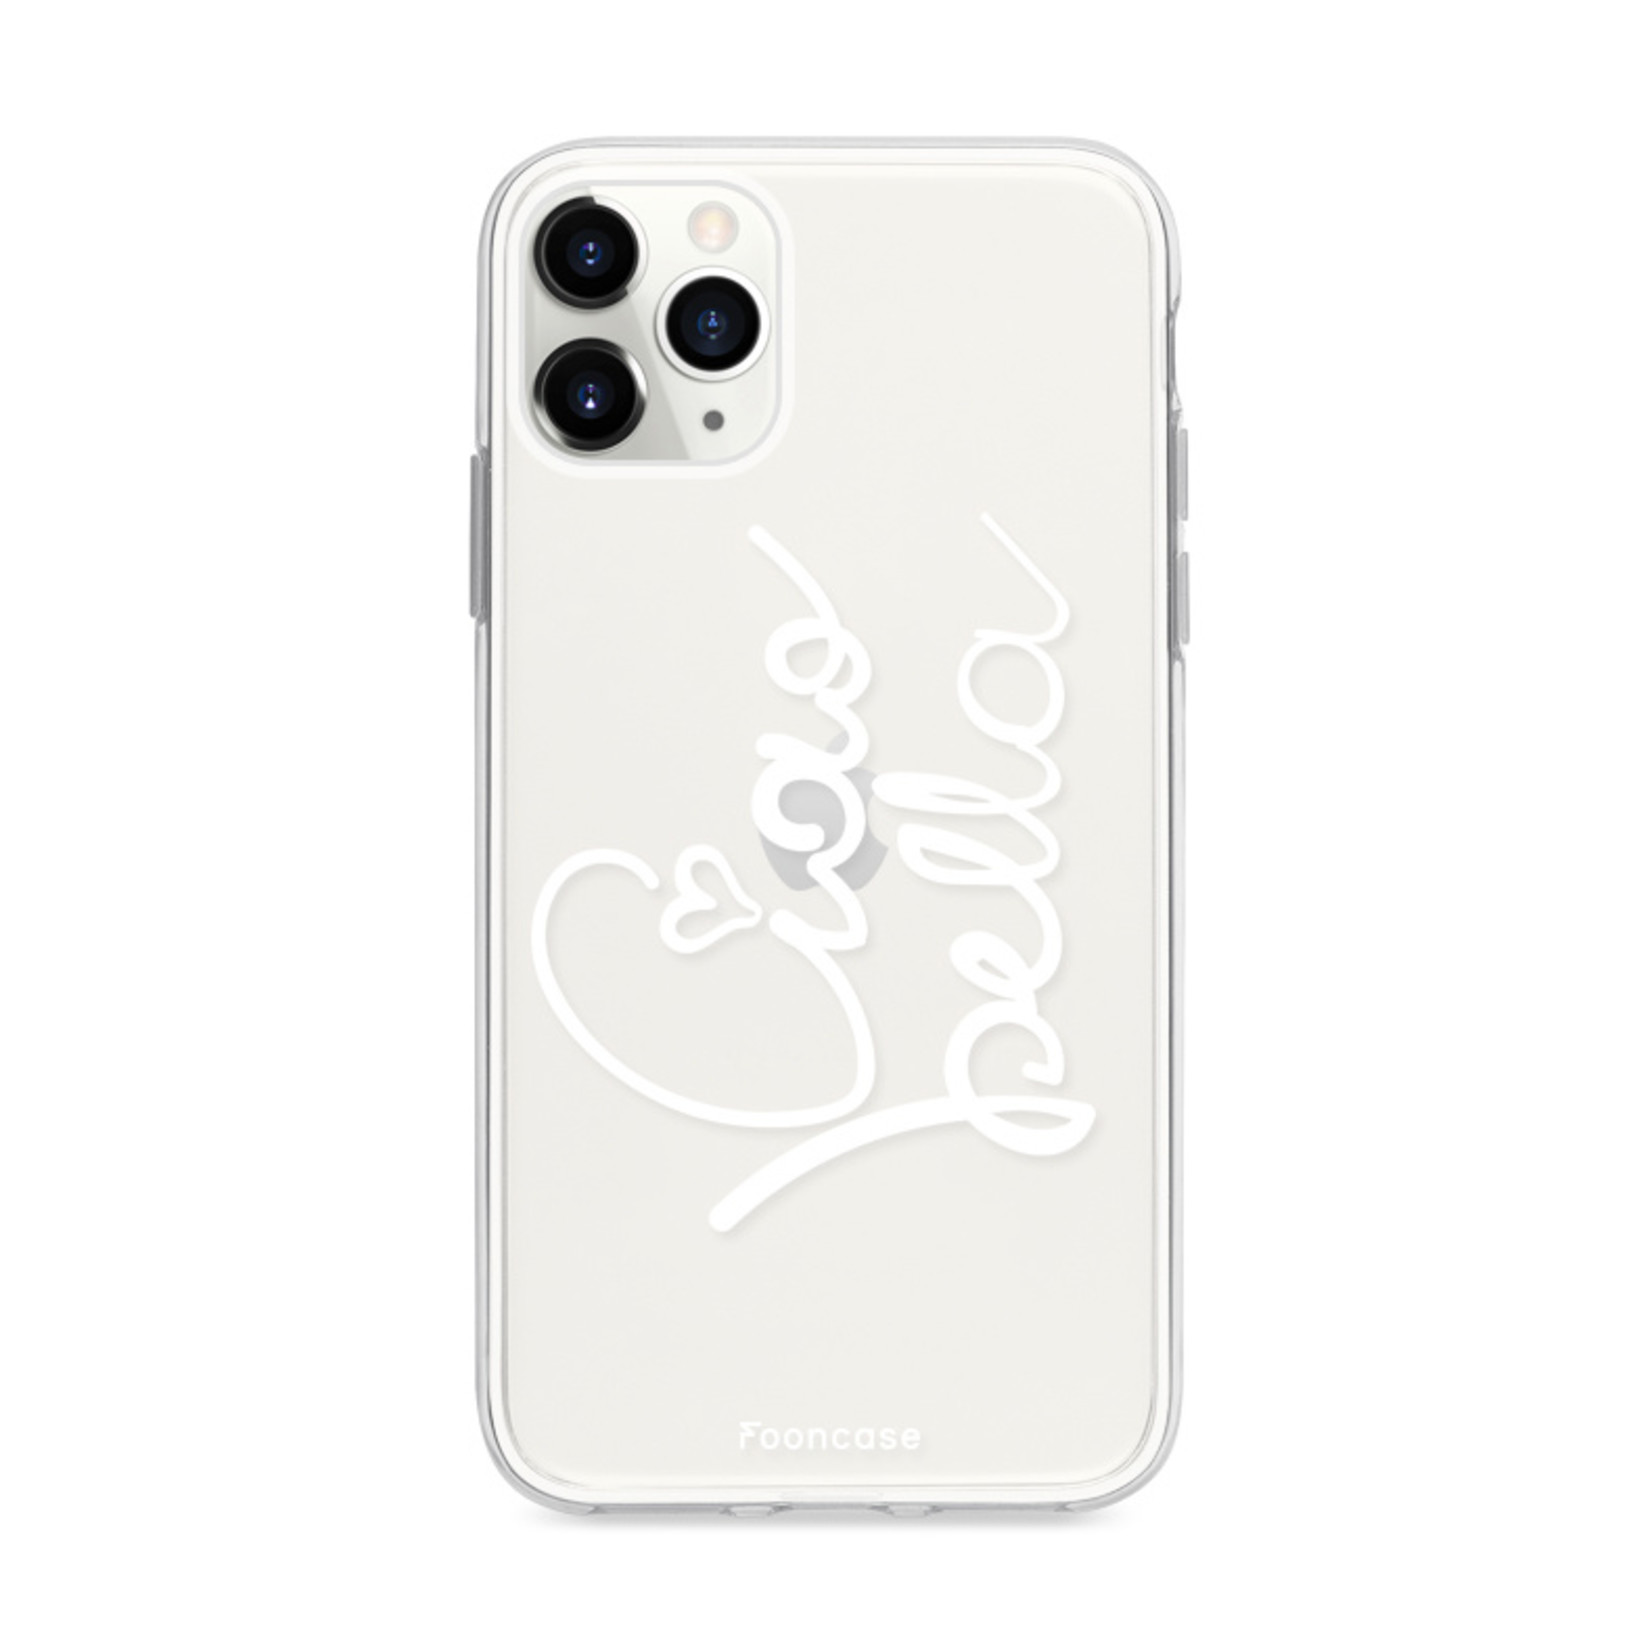 FOONCASE IPhone 12 Pro Case - Ciao Bella!